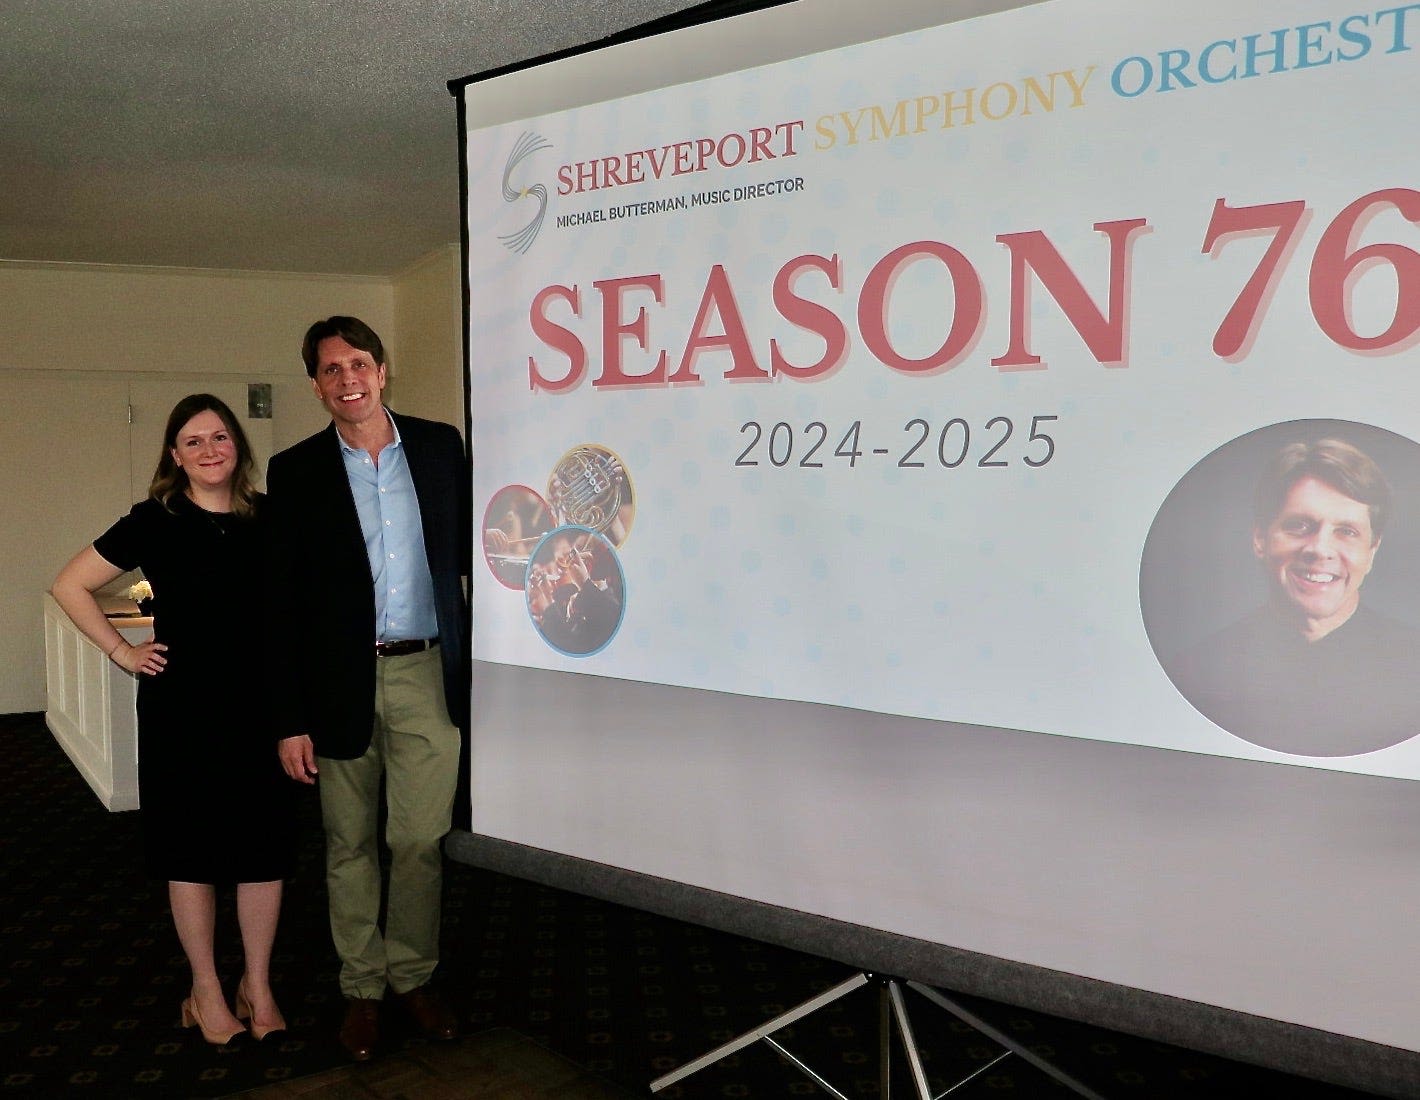 Beethoven will open Shreveport Symphony Orchestra's Willis-Knighton Masterworks Series